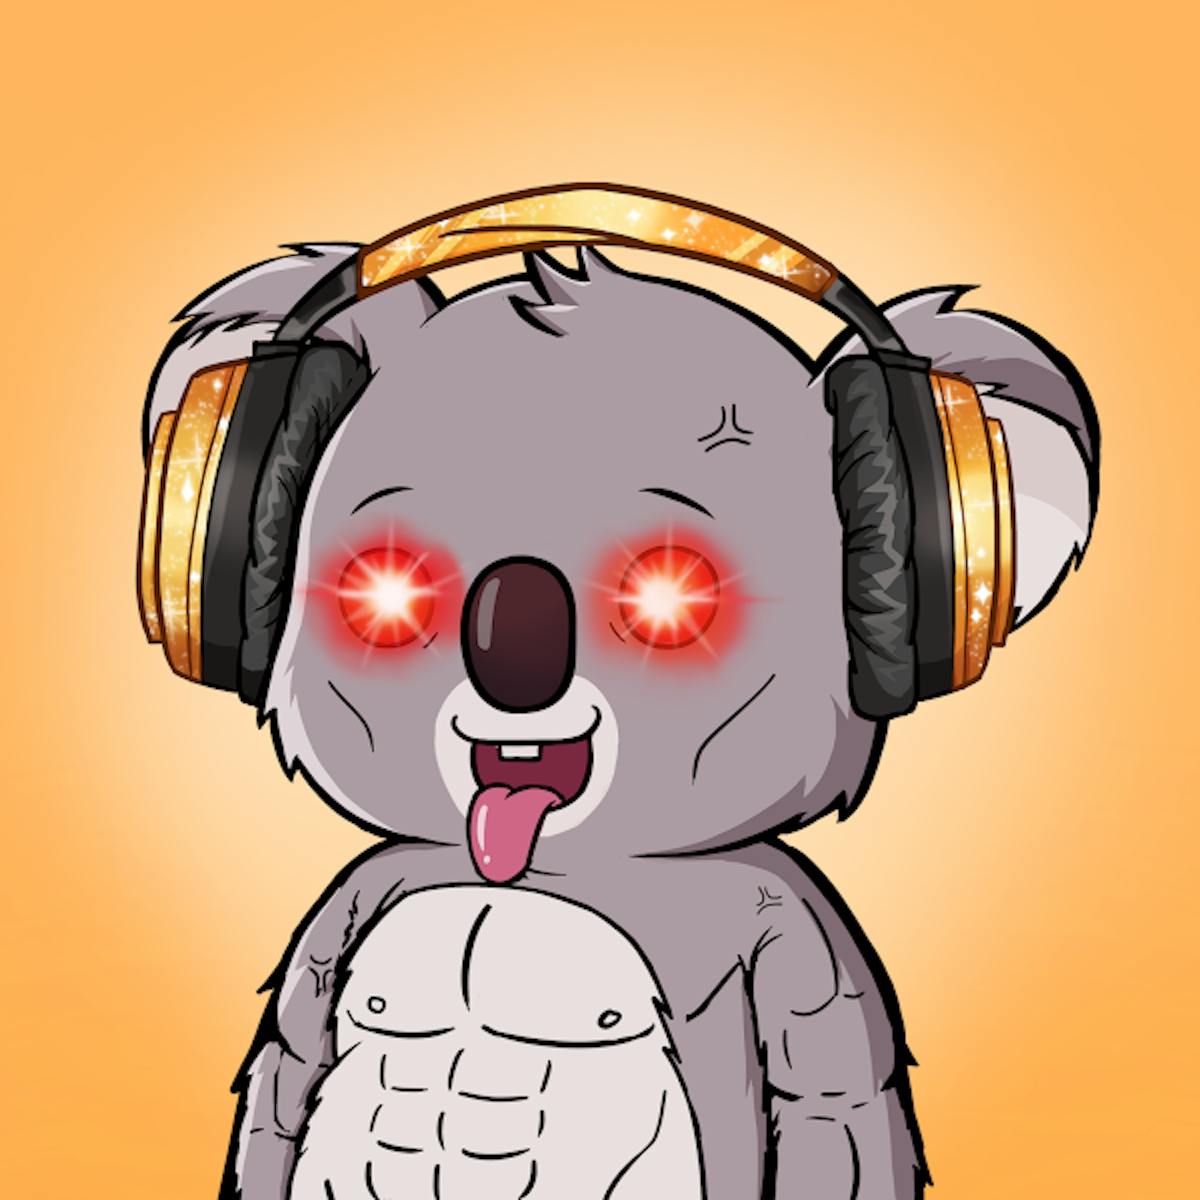 Koala Intelligence Agency #1272 Featuring DJ Headphones